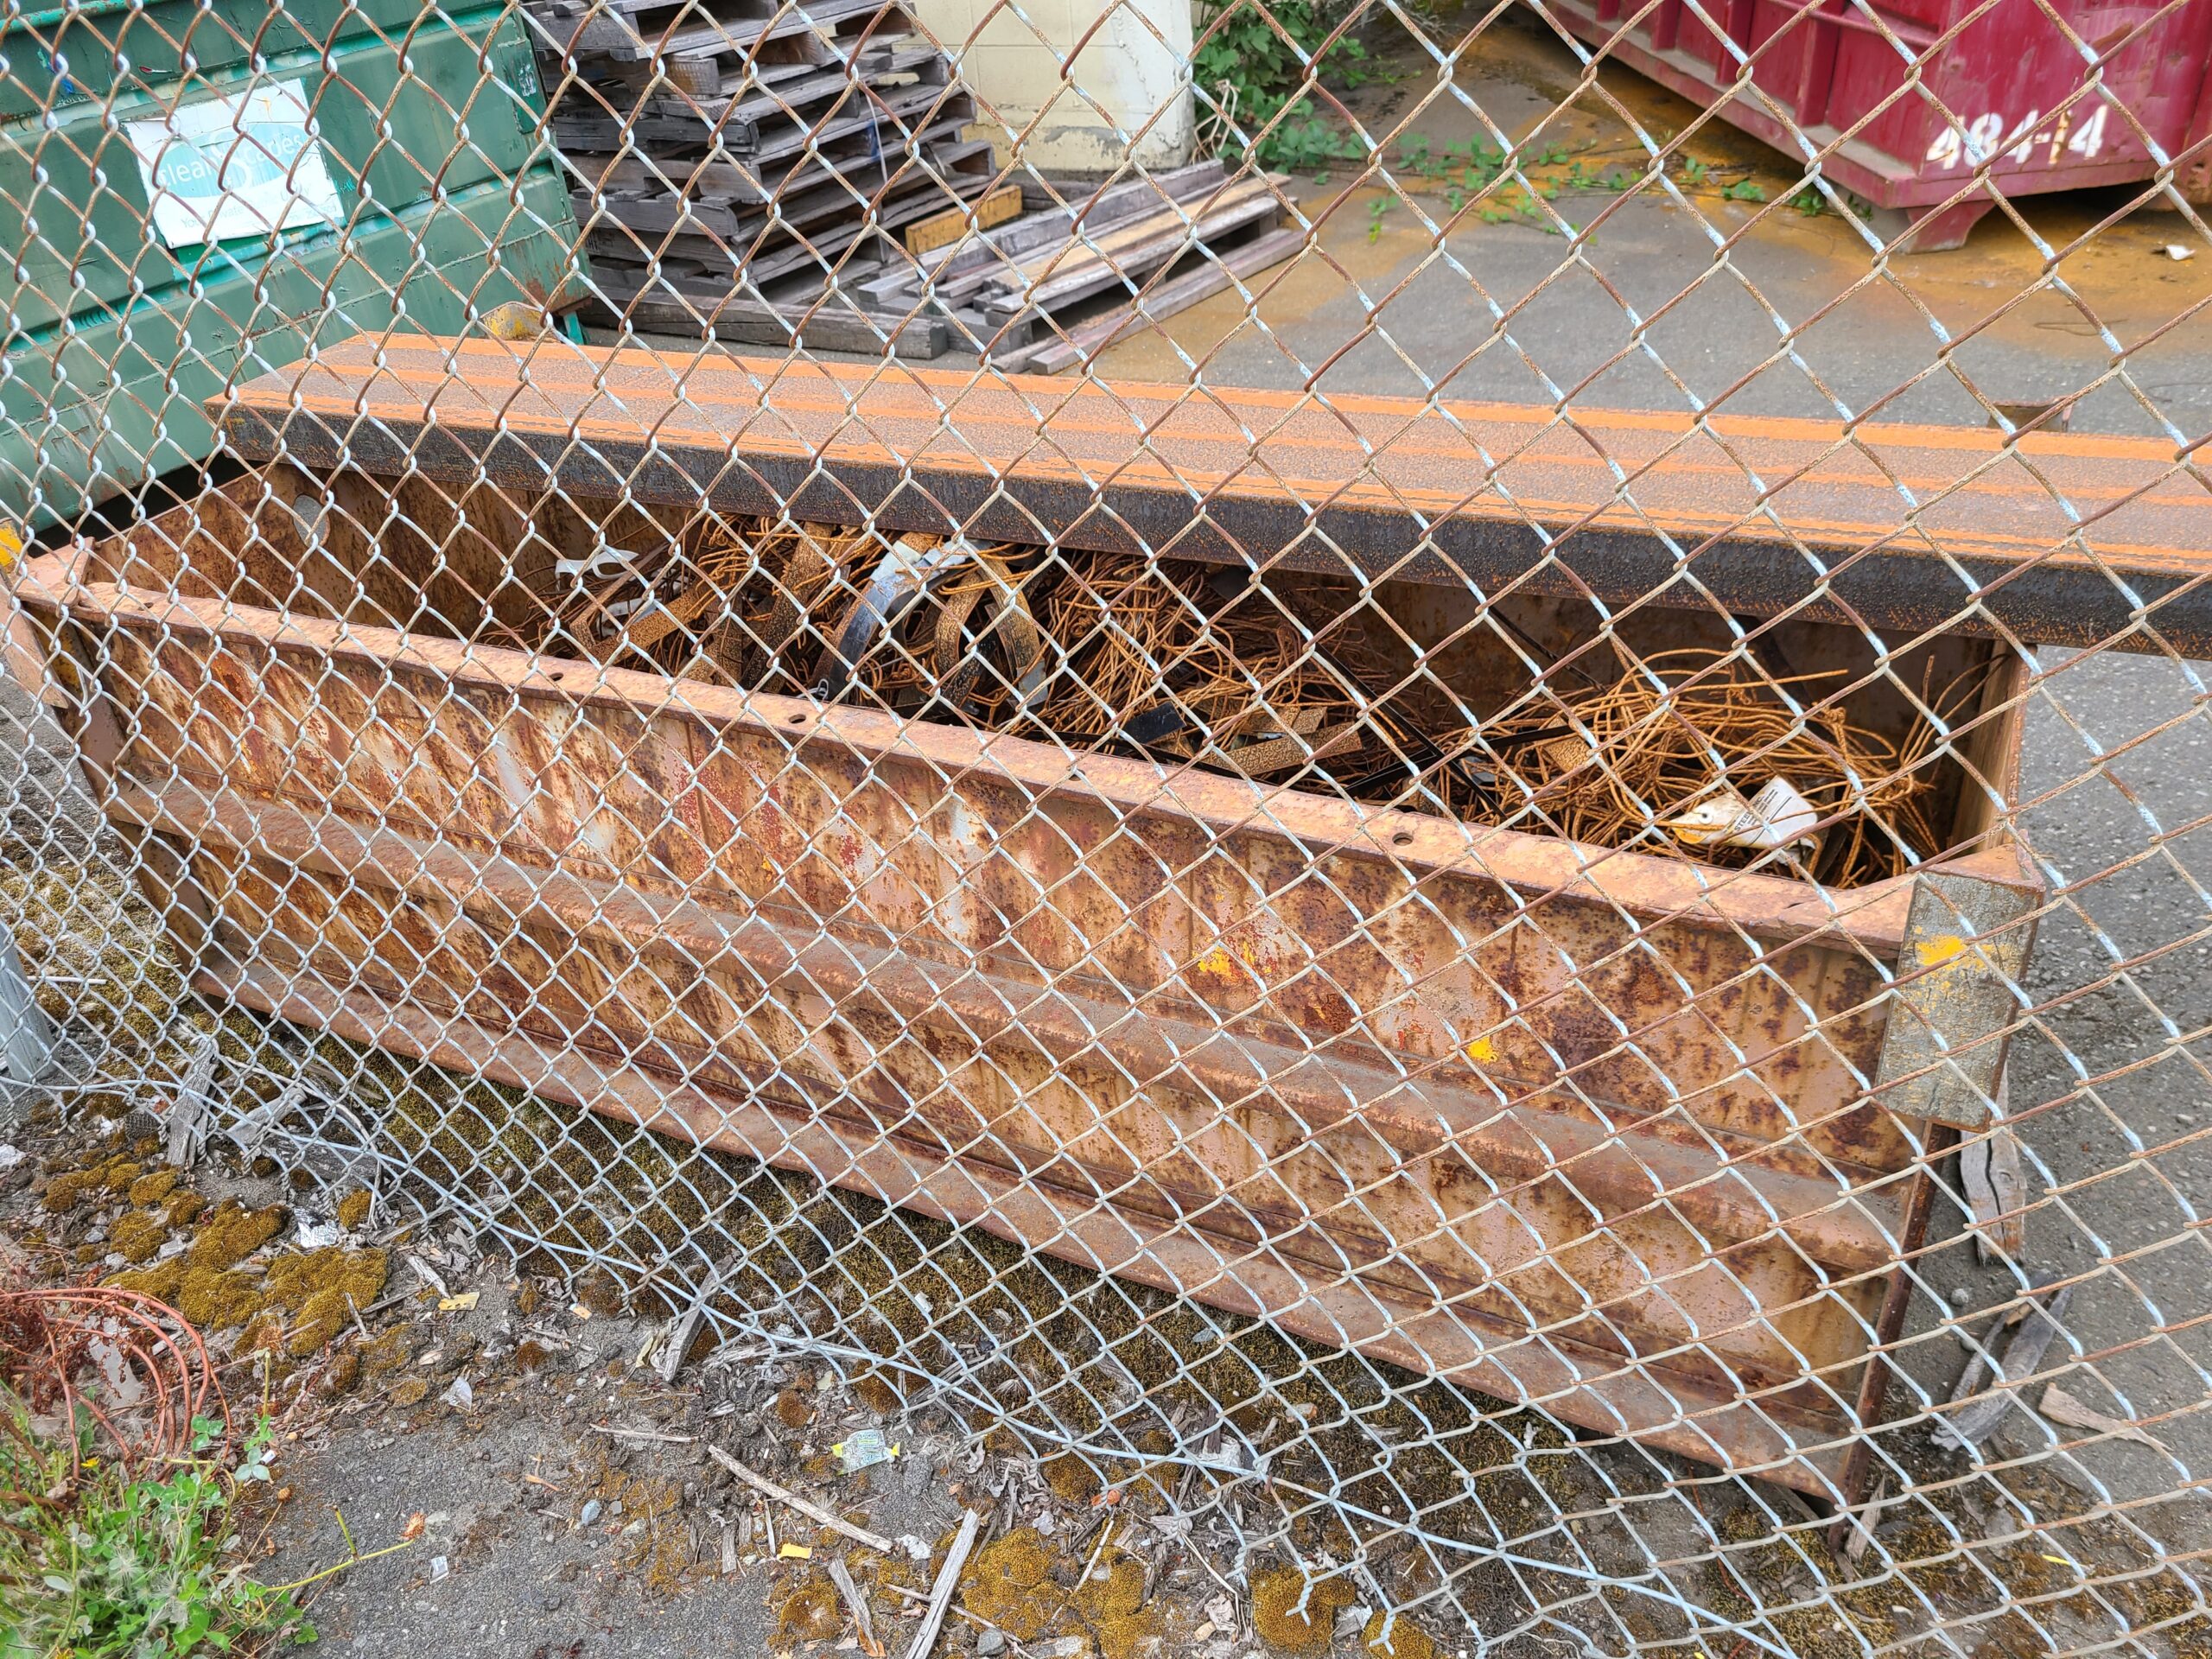 Figure 1: A steel bin full of rusted metal scraps.